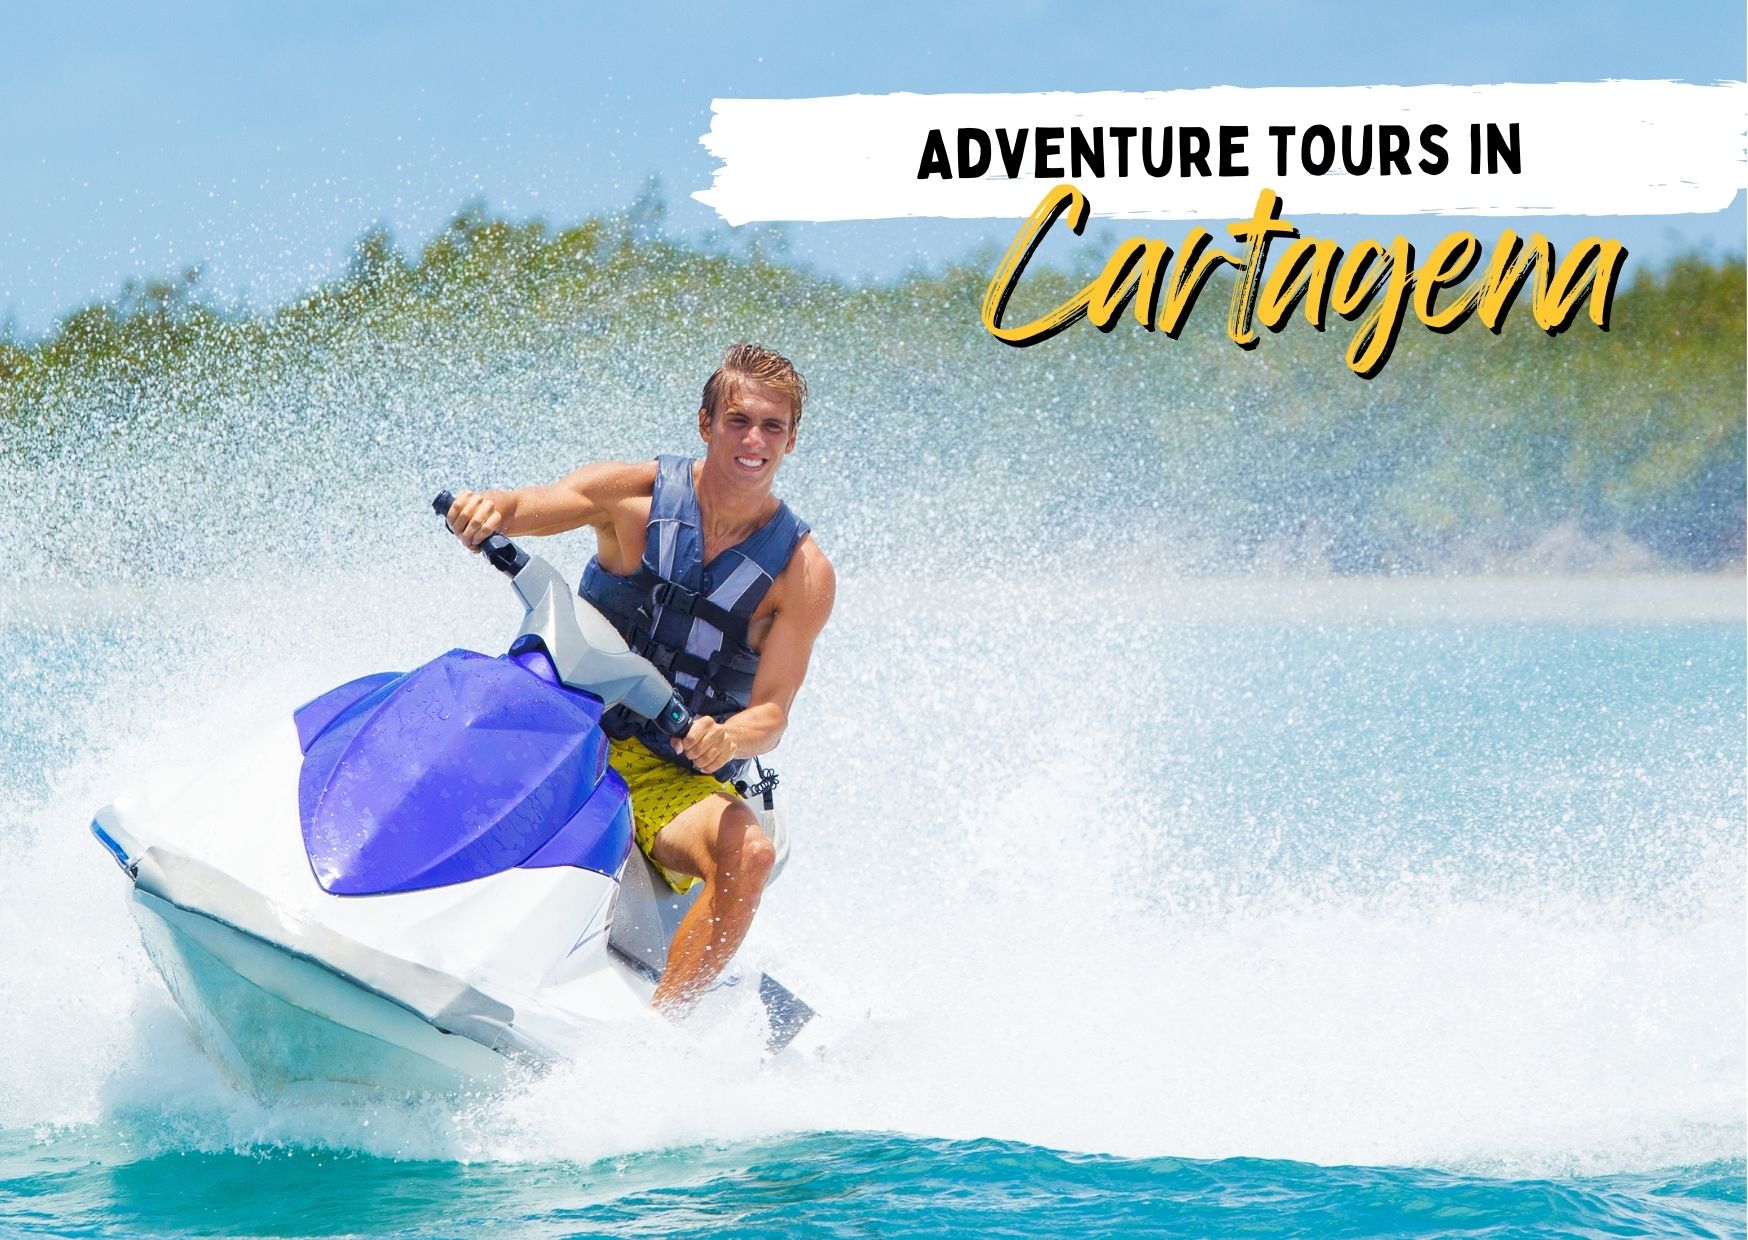 Adventure tours in Cartagena